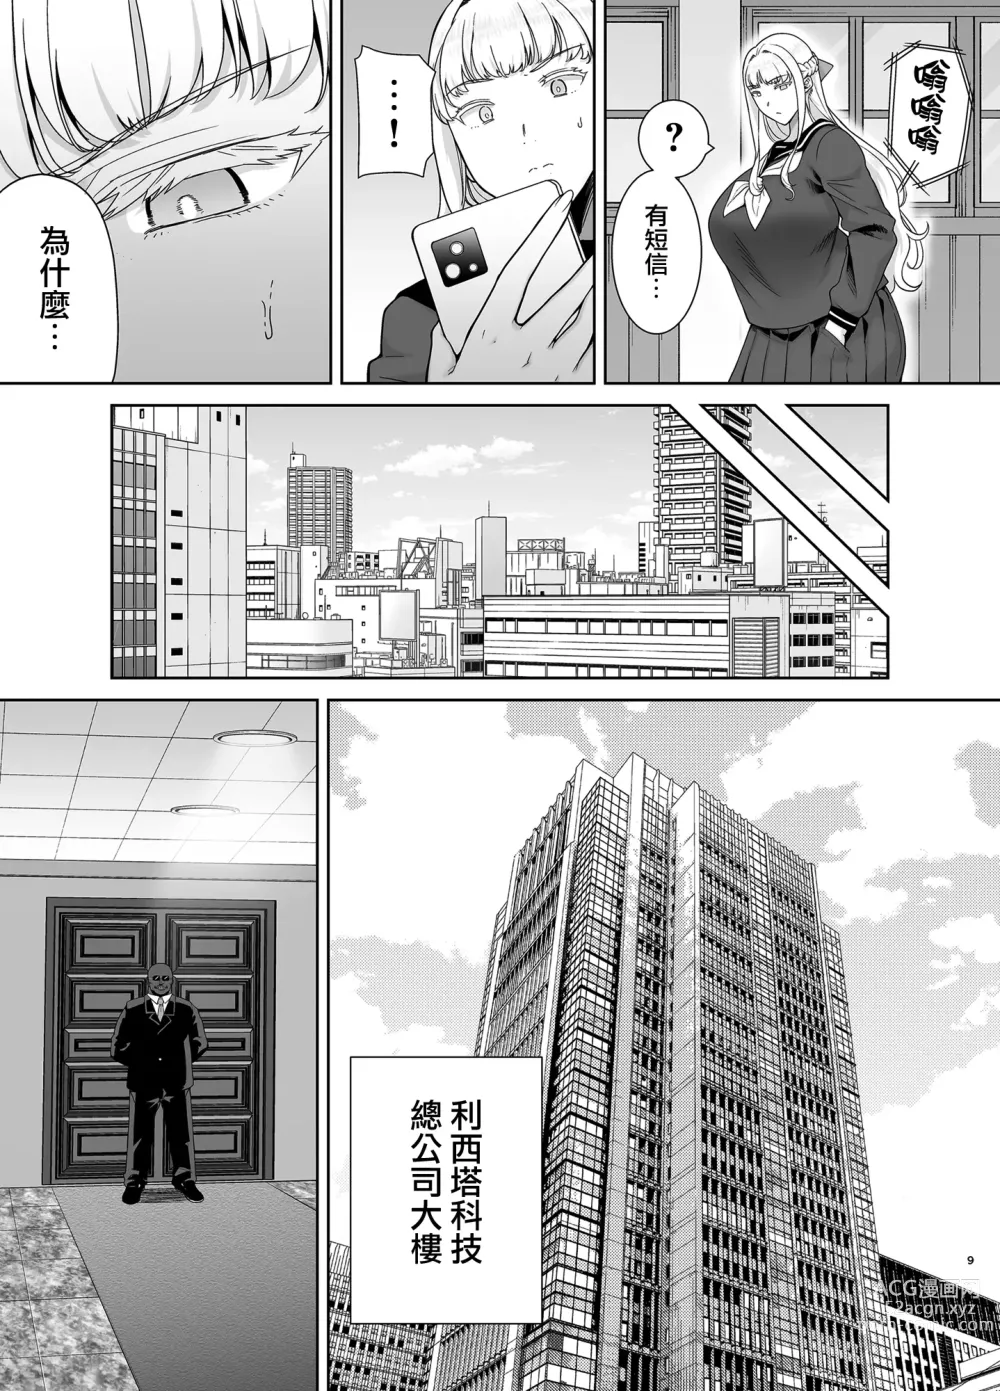 Page 9 of manga 聖華女学院公認竿おじさん7